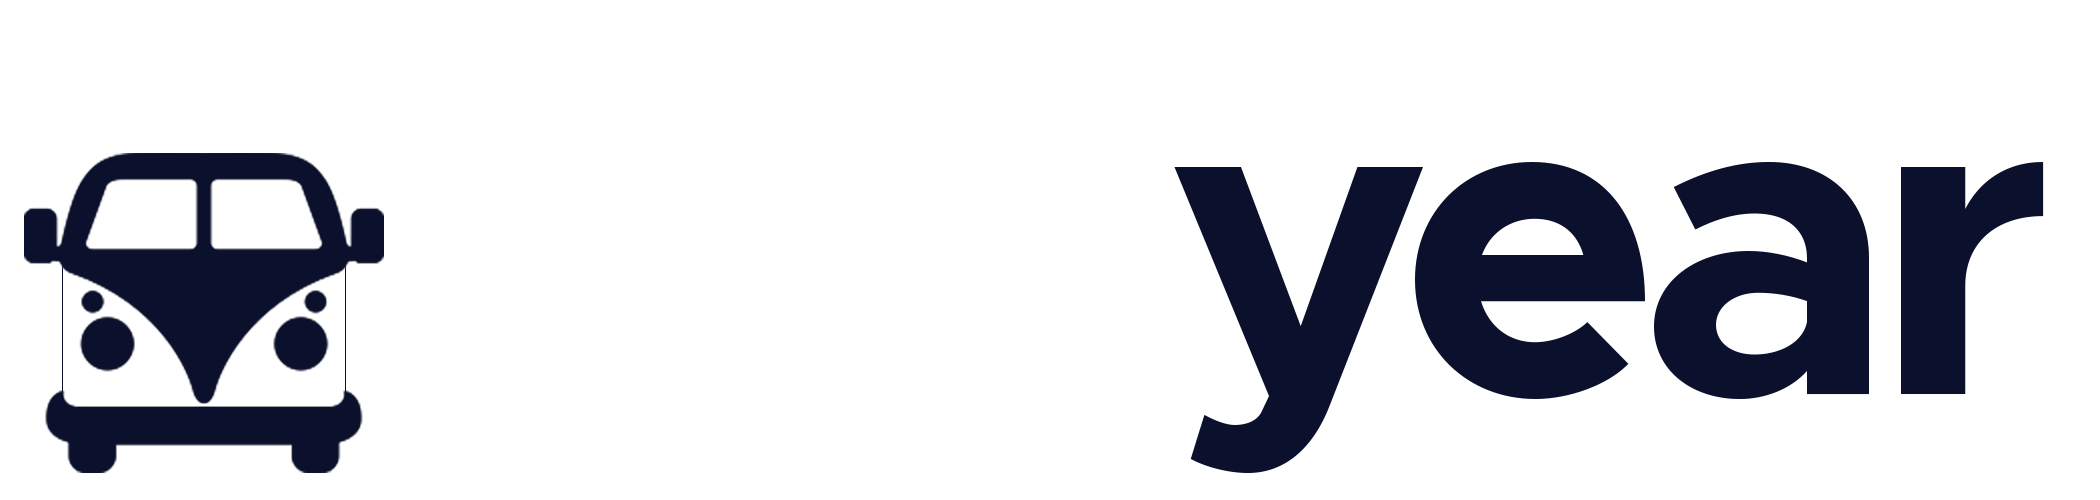 gap-year-logo-dk1